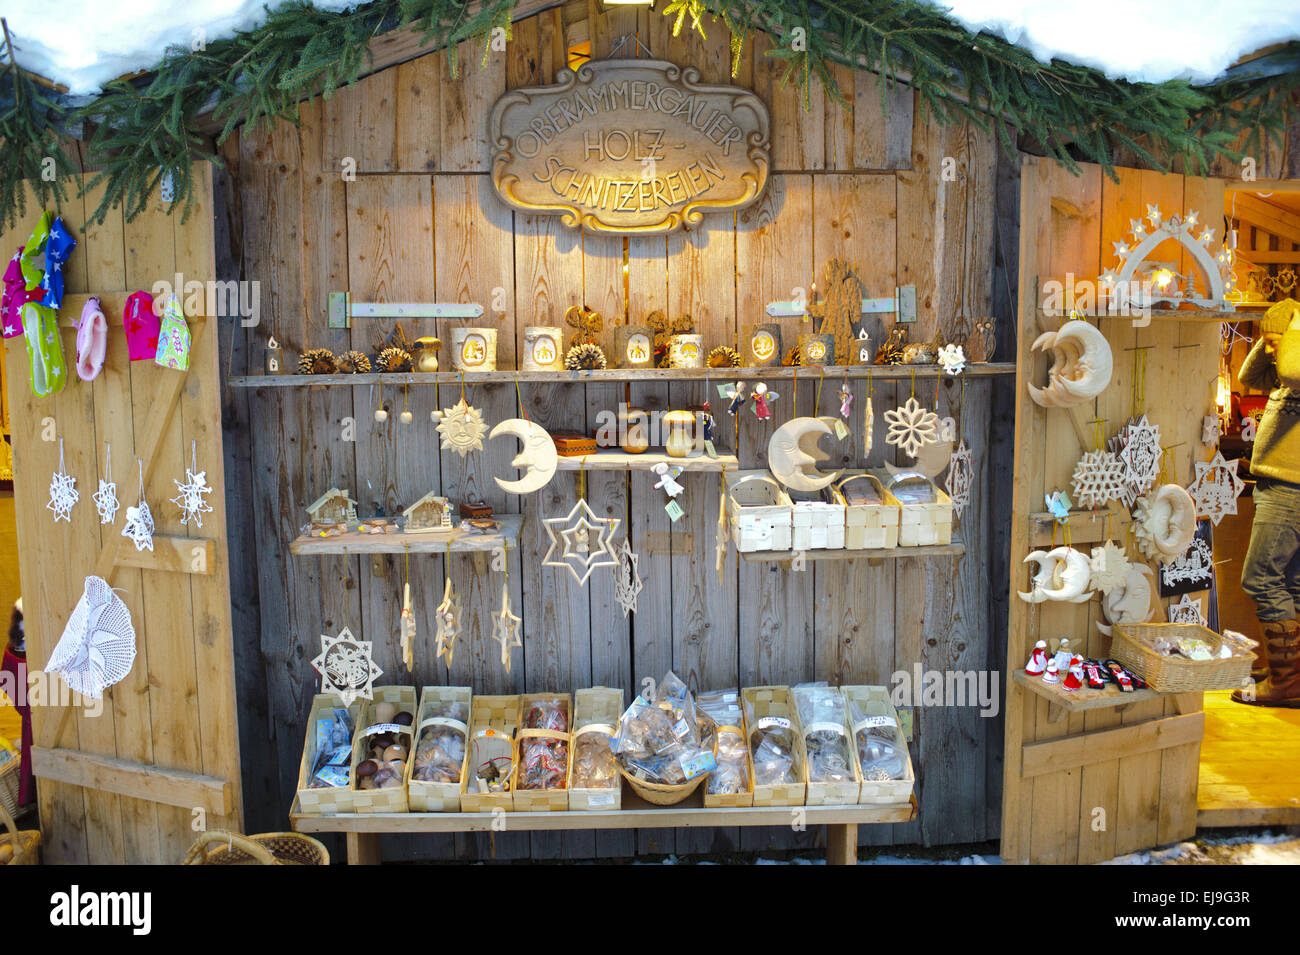 christmas market in Bavaria, Germany Stock Photo